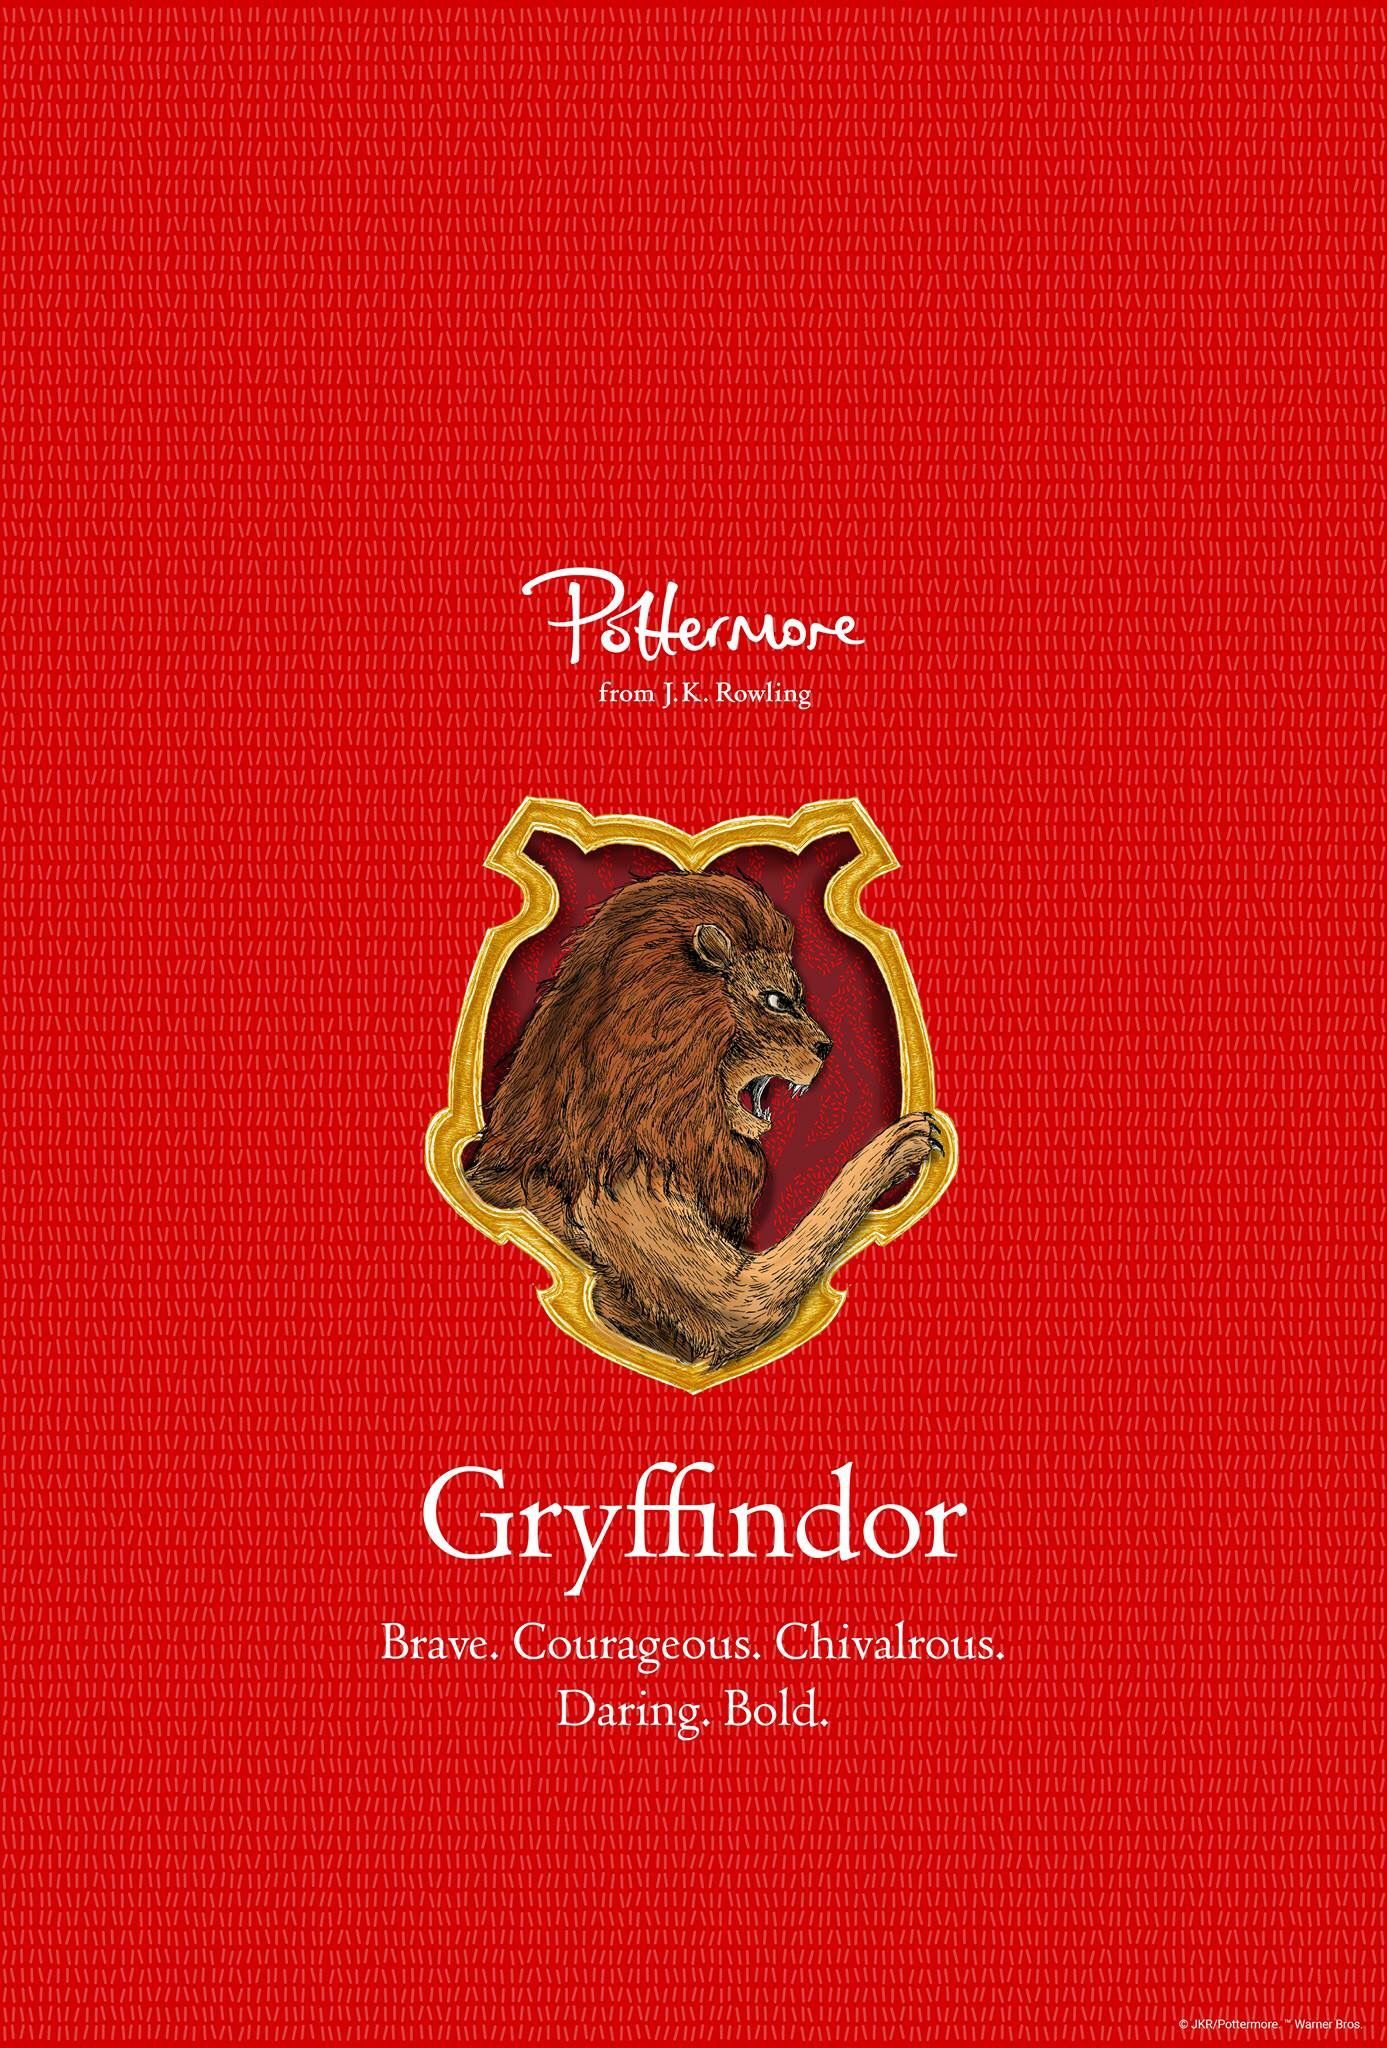 Harry Potter Gryffindor Wallpapers - Wallpaper Cave